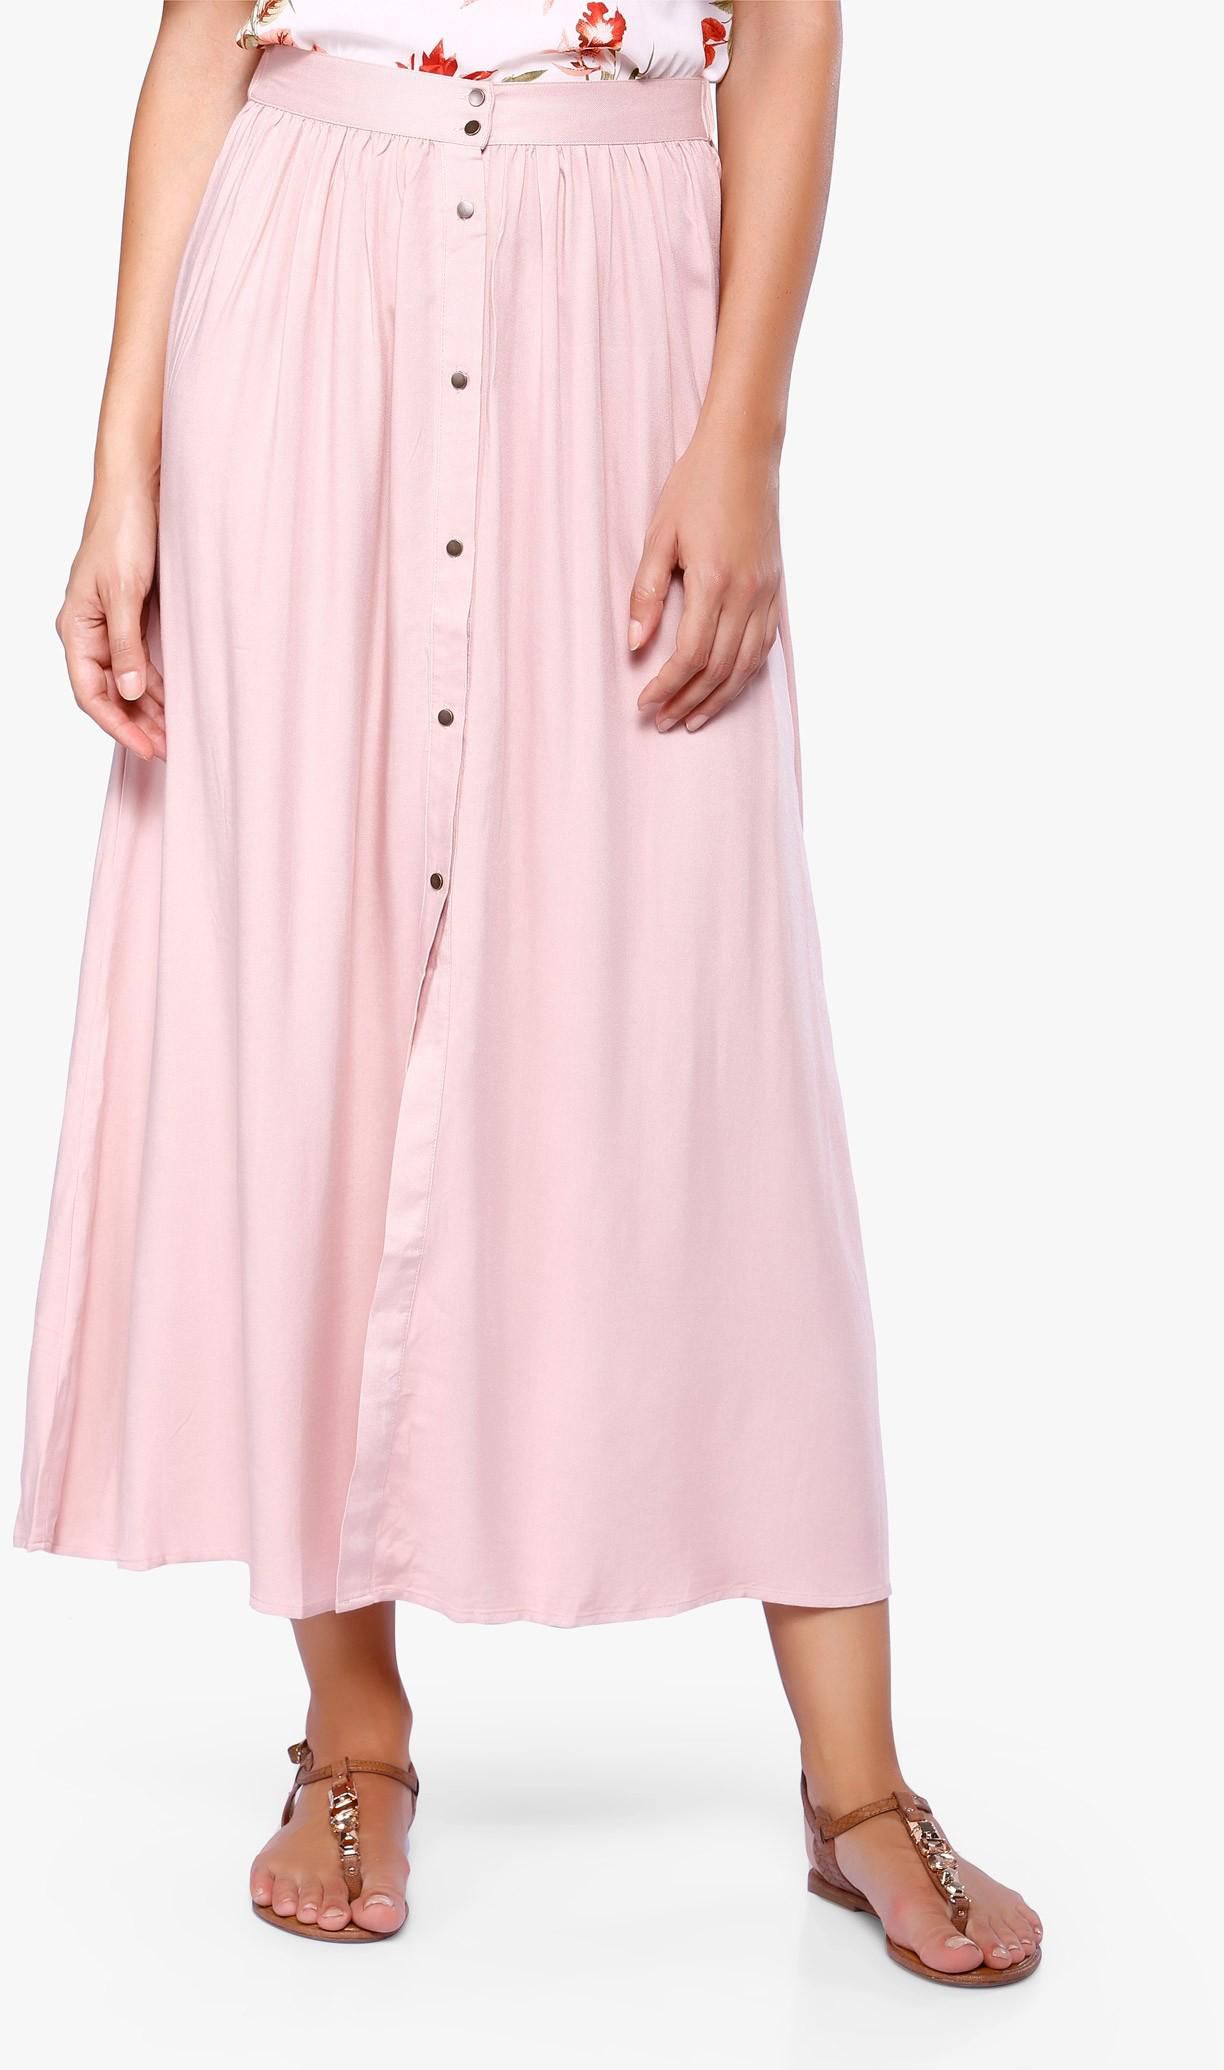 Blush Pink Button Front A-Line Skirt